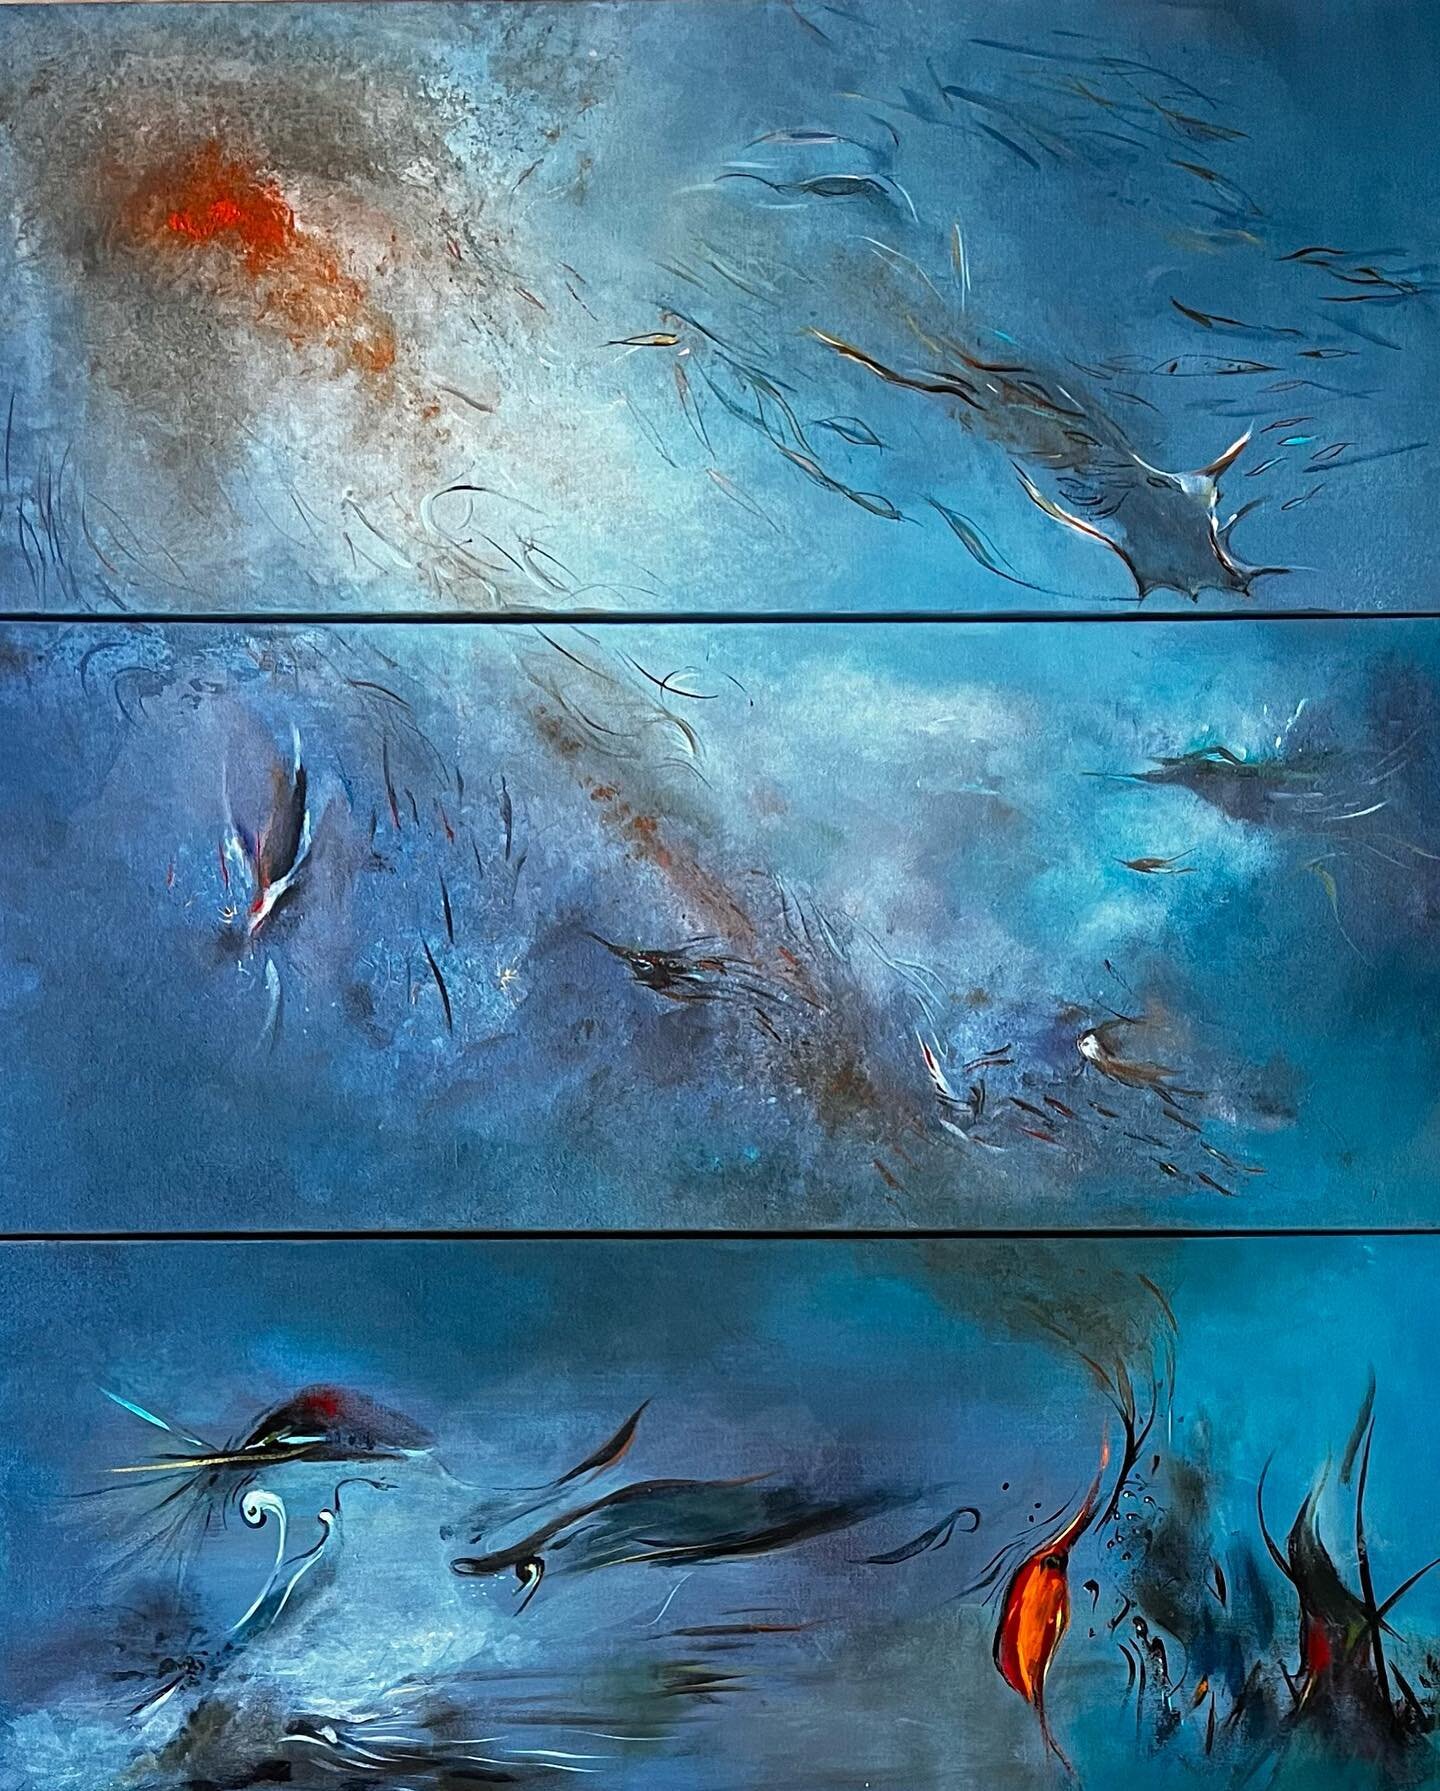 Ocean creatures ; Acrylic on Triptych : 40&rsquo;&rsquo;x 48&rdquo; (ea: 40&rdquo;x16&rdquo;)Canvases #unframed #malakmorganart.com; #galerie #neworleansartist #artforsale #abstractartist #barrierreef #Nature #impressionism #neworleansartist #savethe